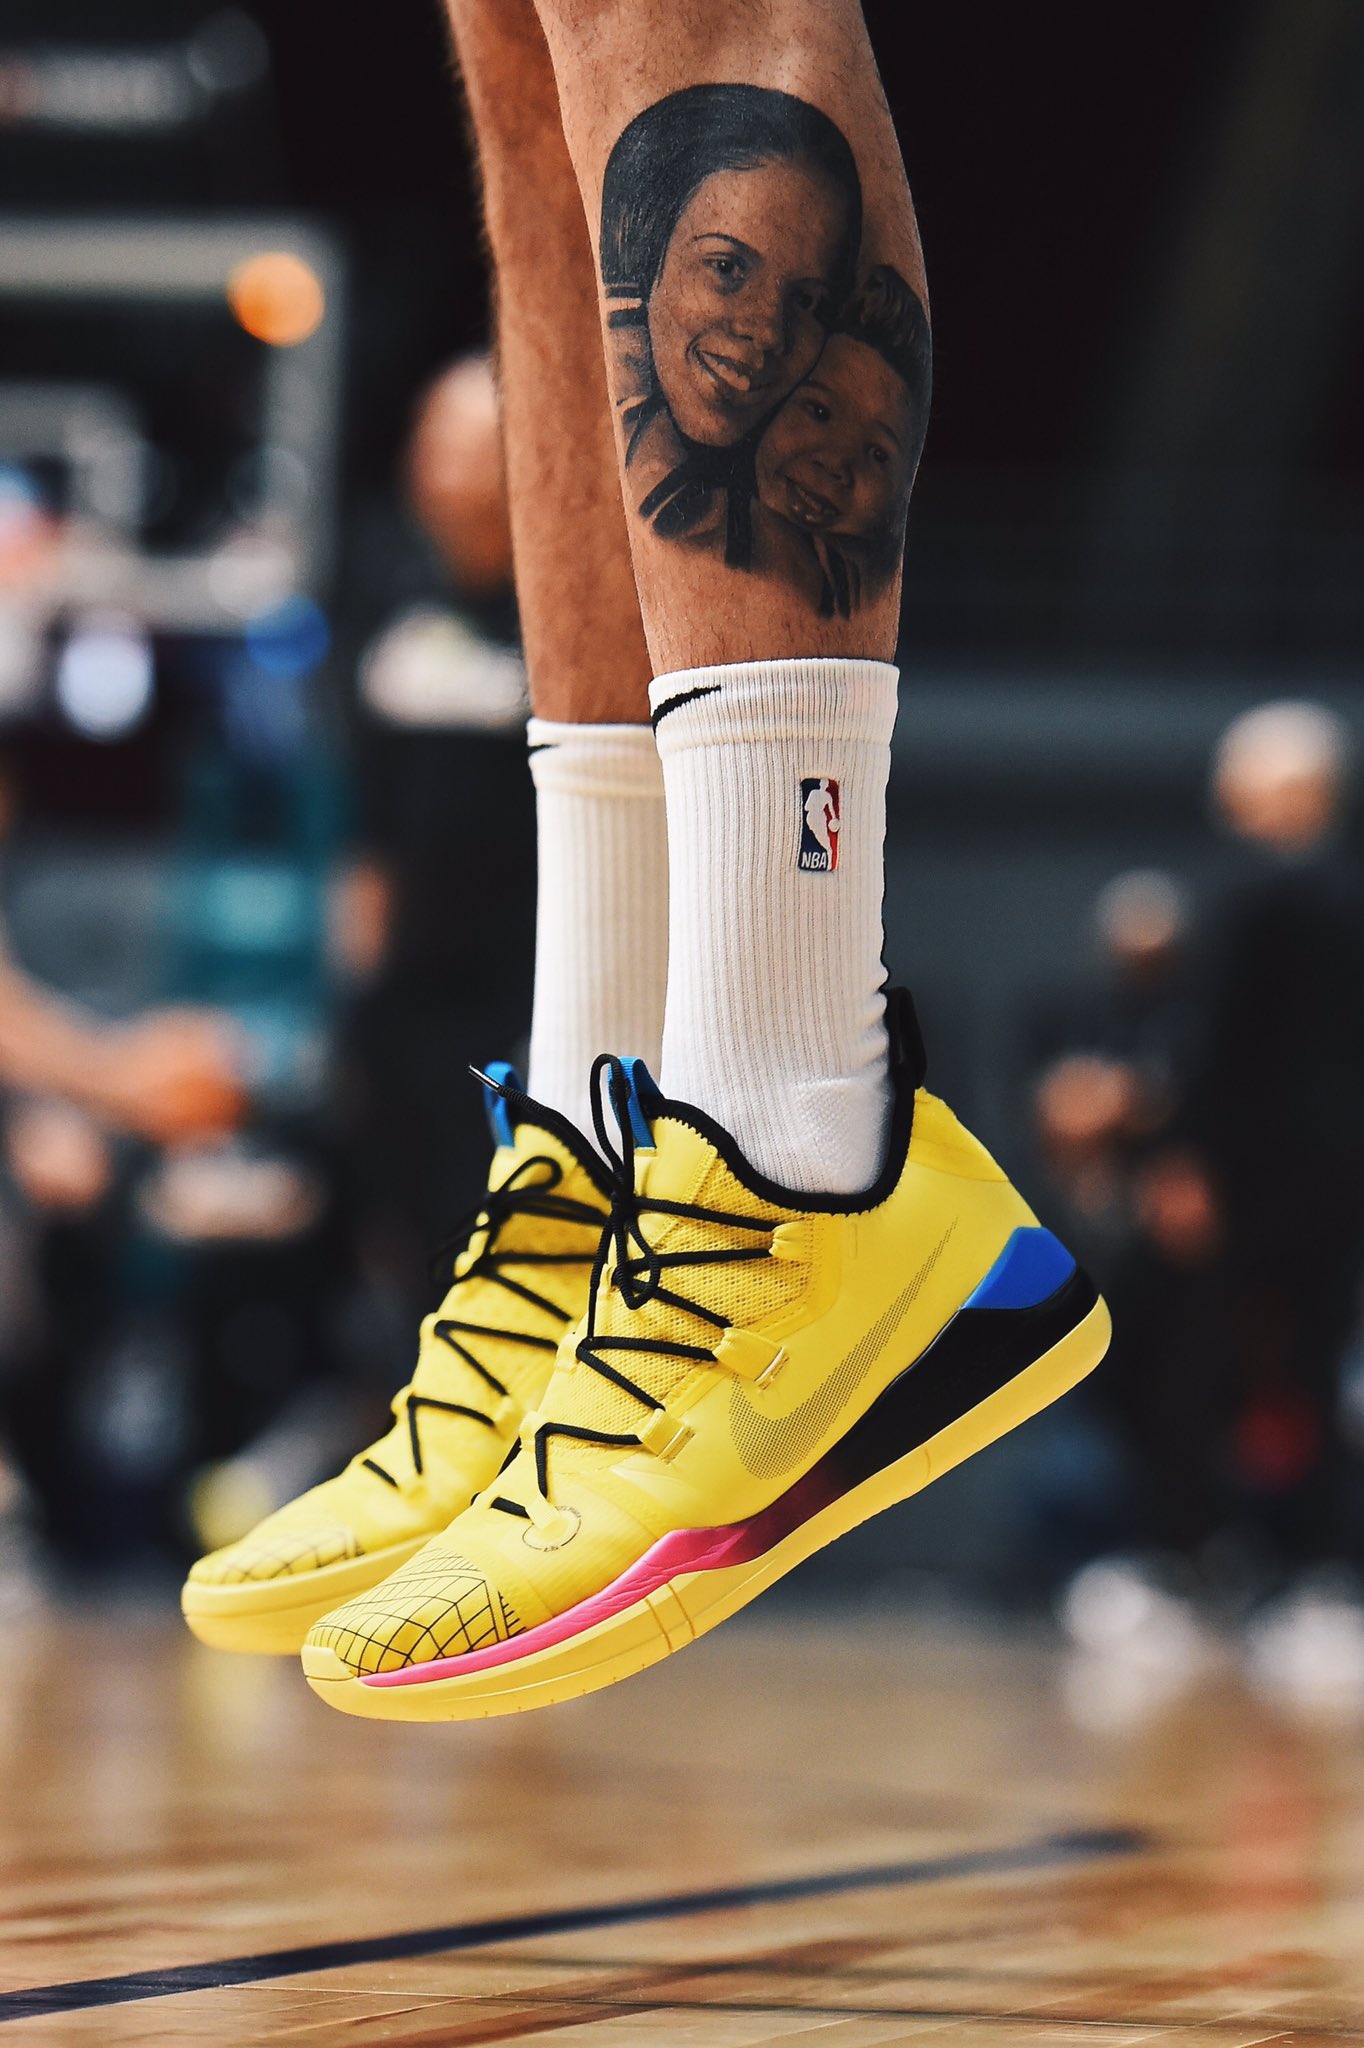 B/R Kicks on "A closer at @jaytatum0 wearing the Nike Kobe A.D. at Rising Stars practice. https://t.co/E8PRxc77IP"